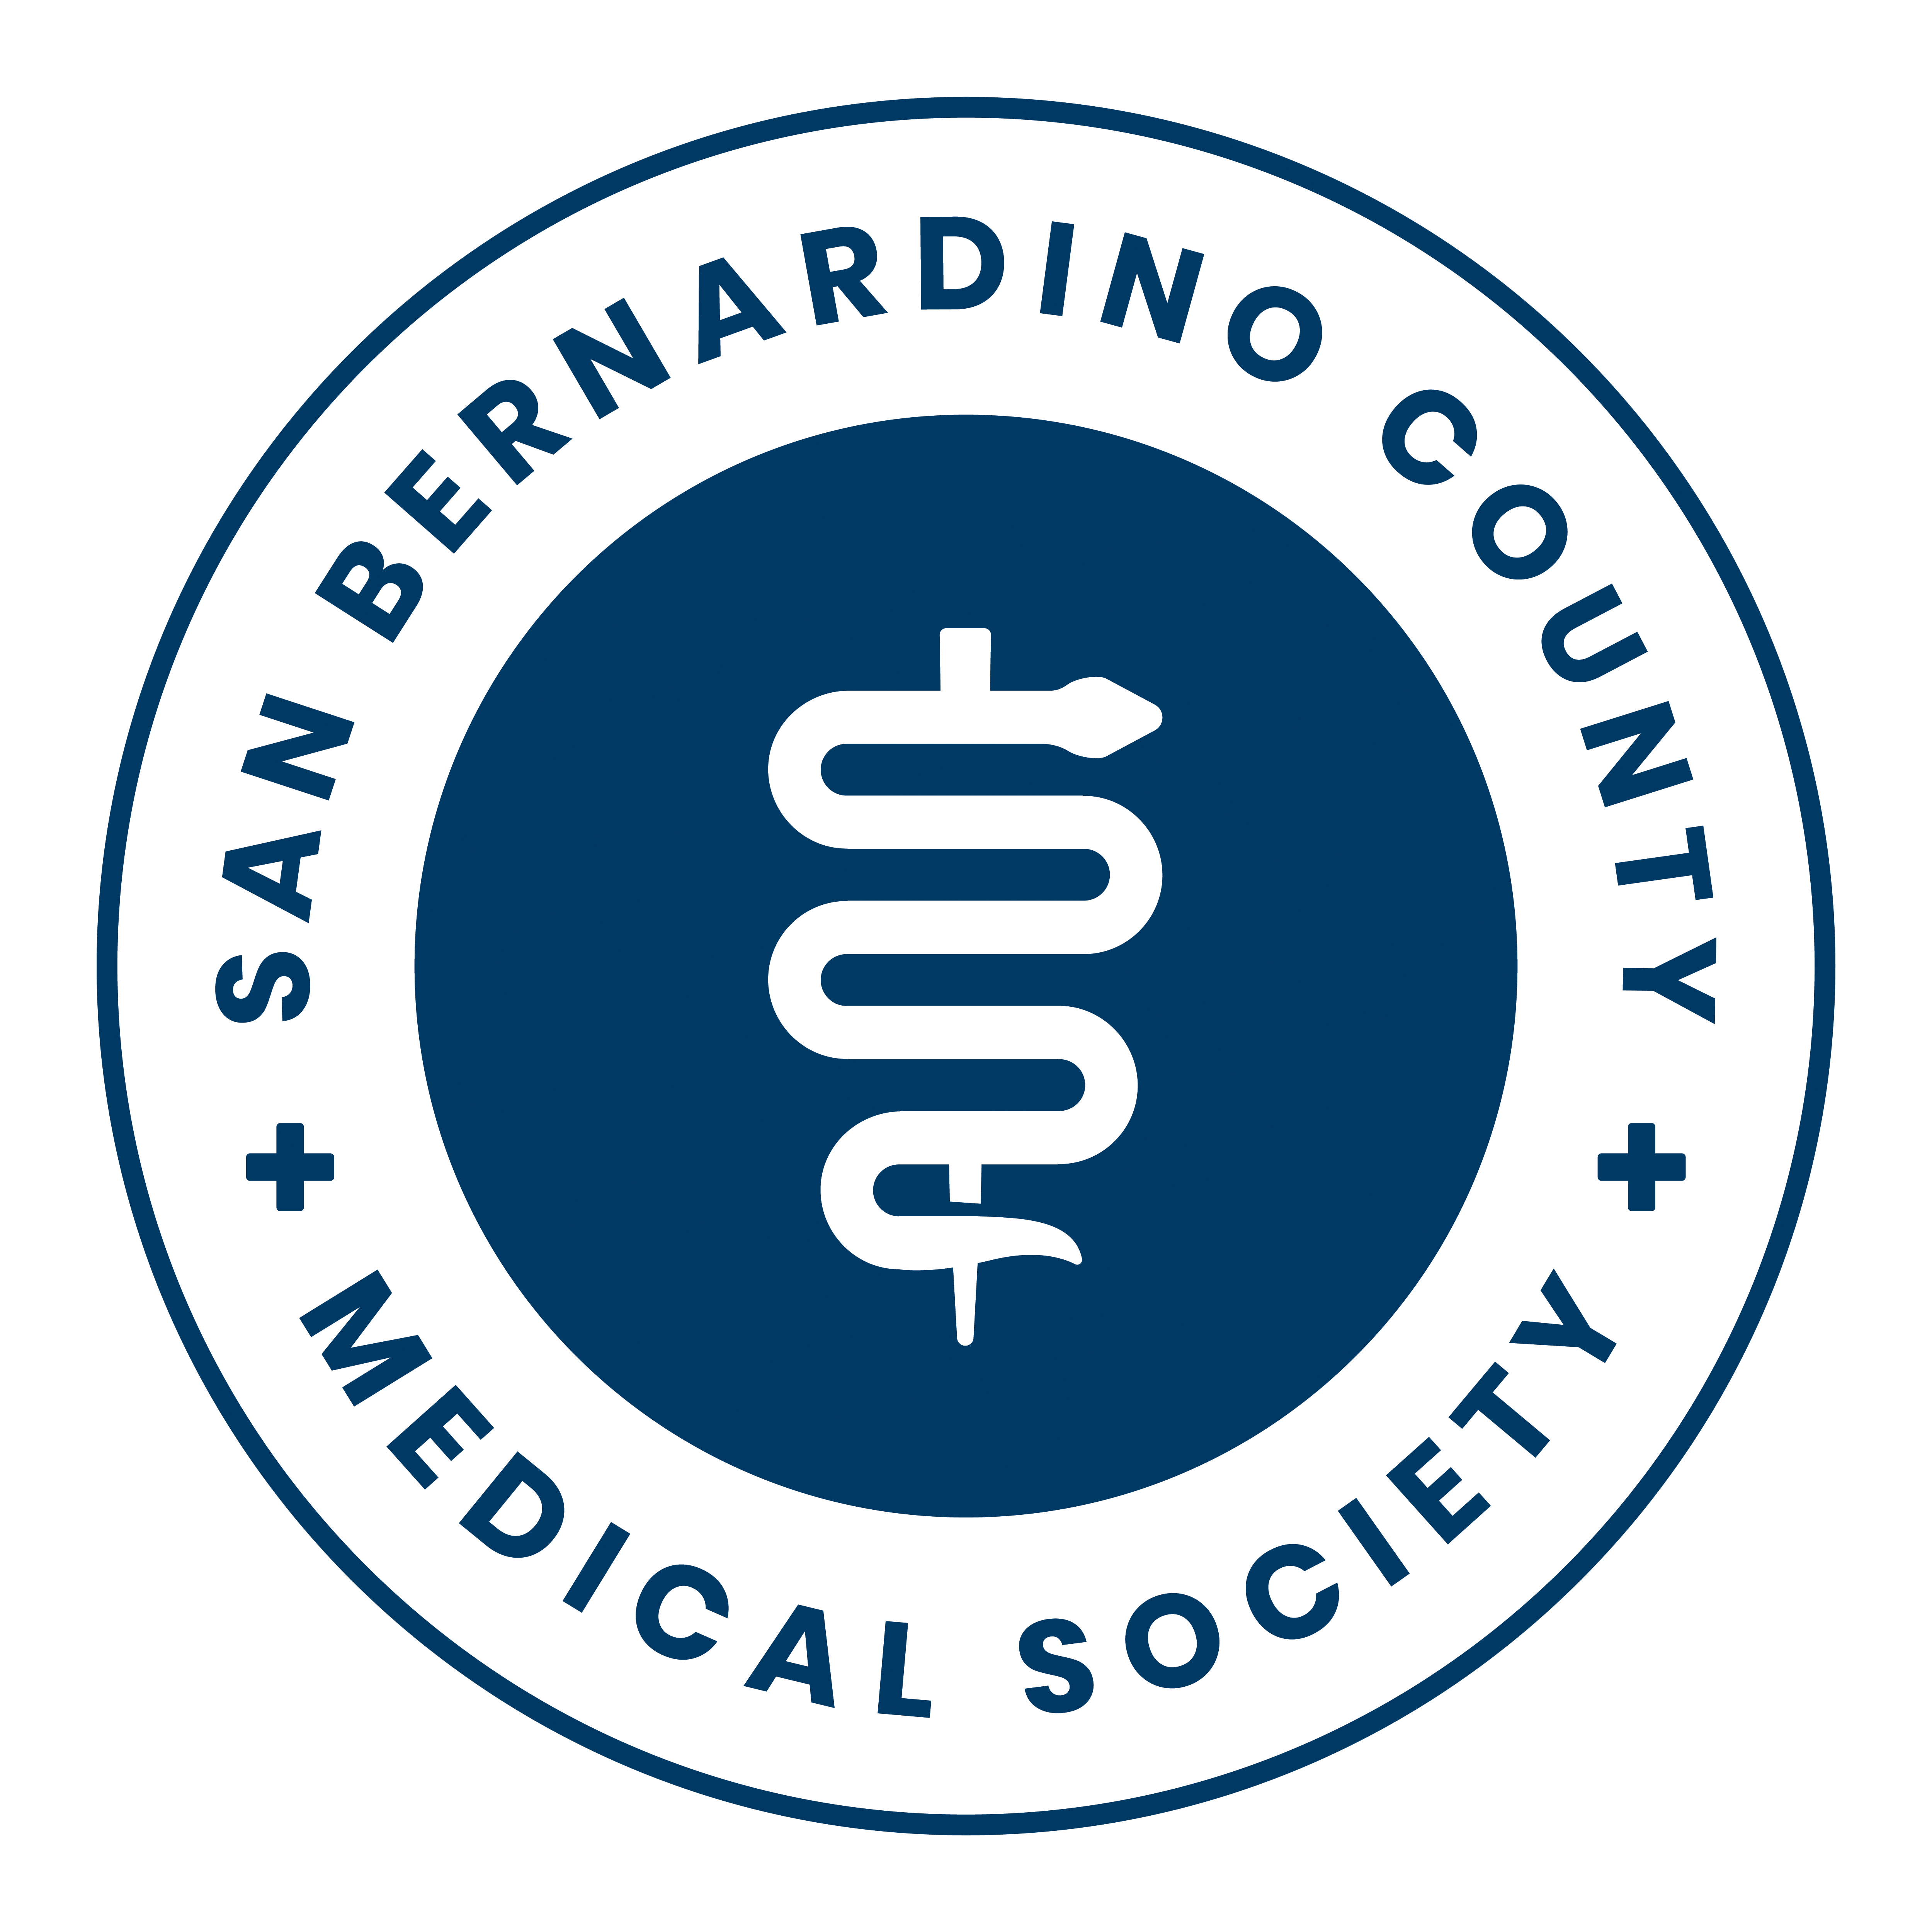 San Bernardino County Medical Society logo; name in a circular fashion surrounding a snake and wand on a dark blue background